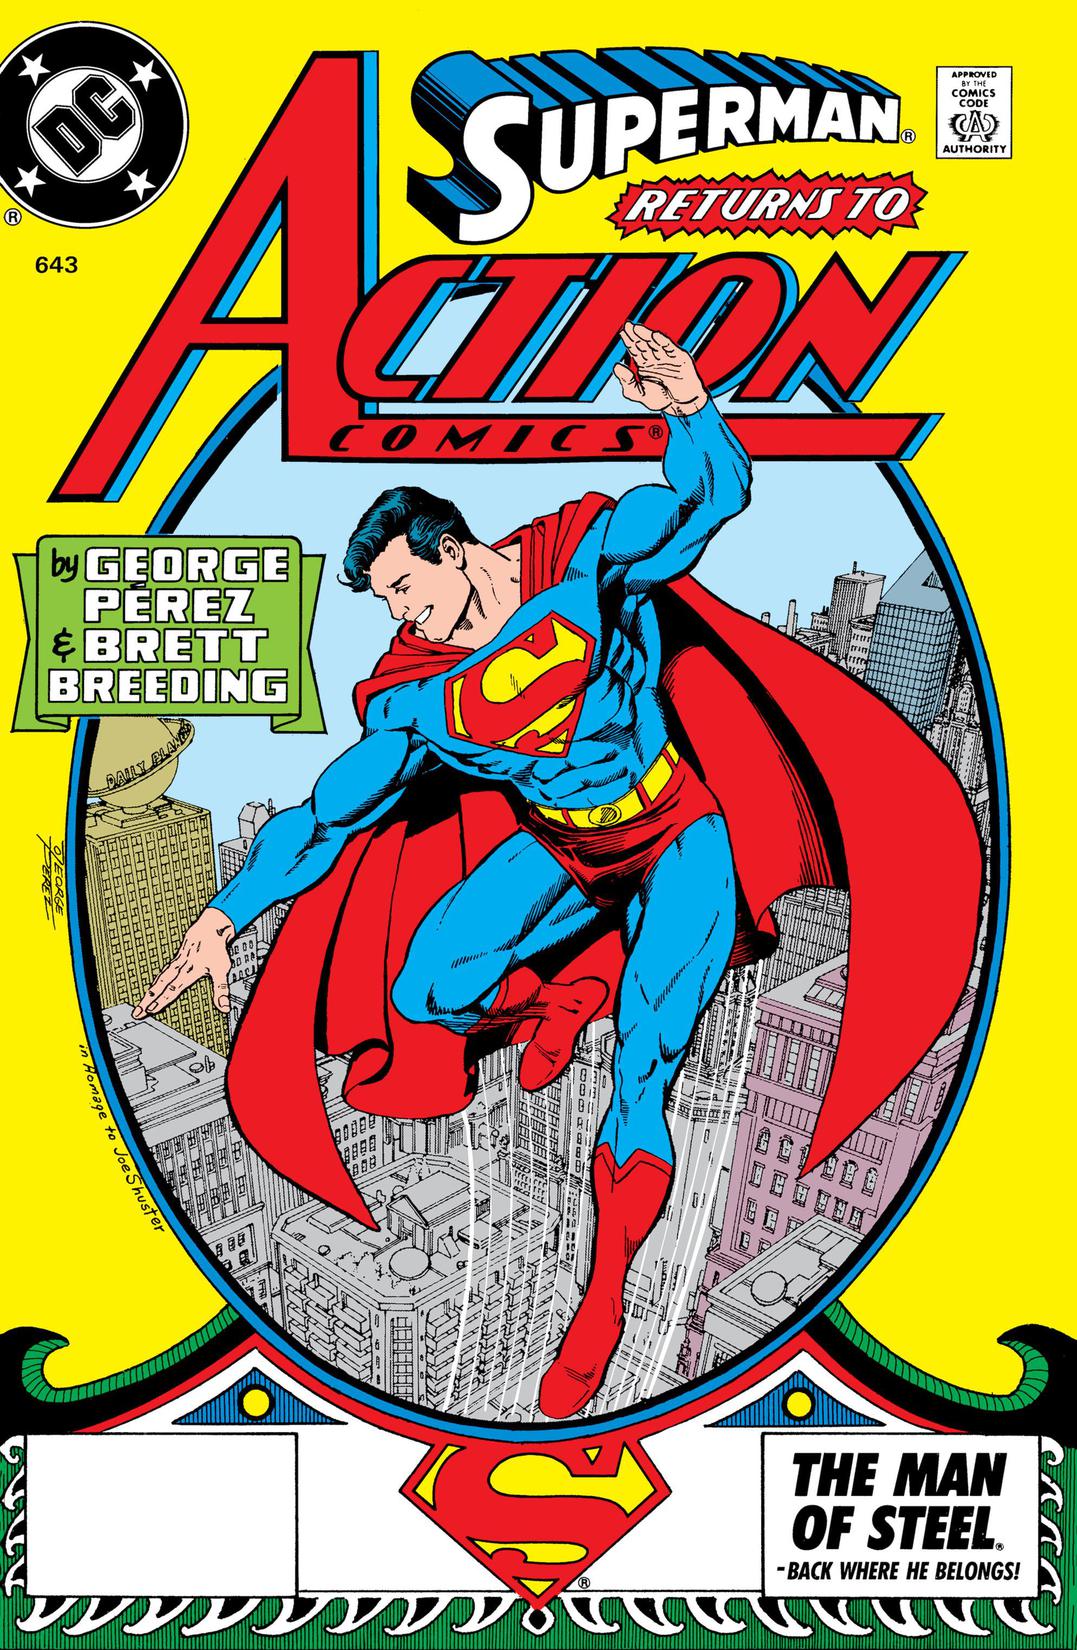 Action Comics (1938-2011) #643 preview images